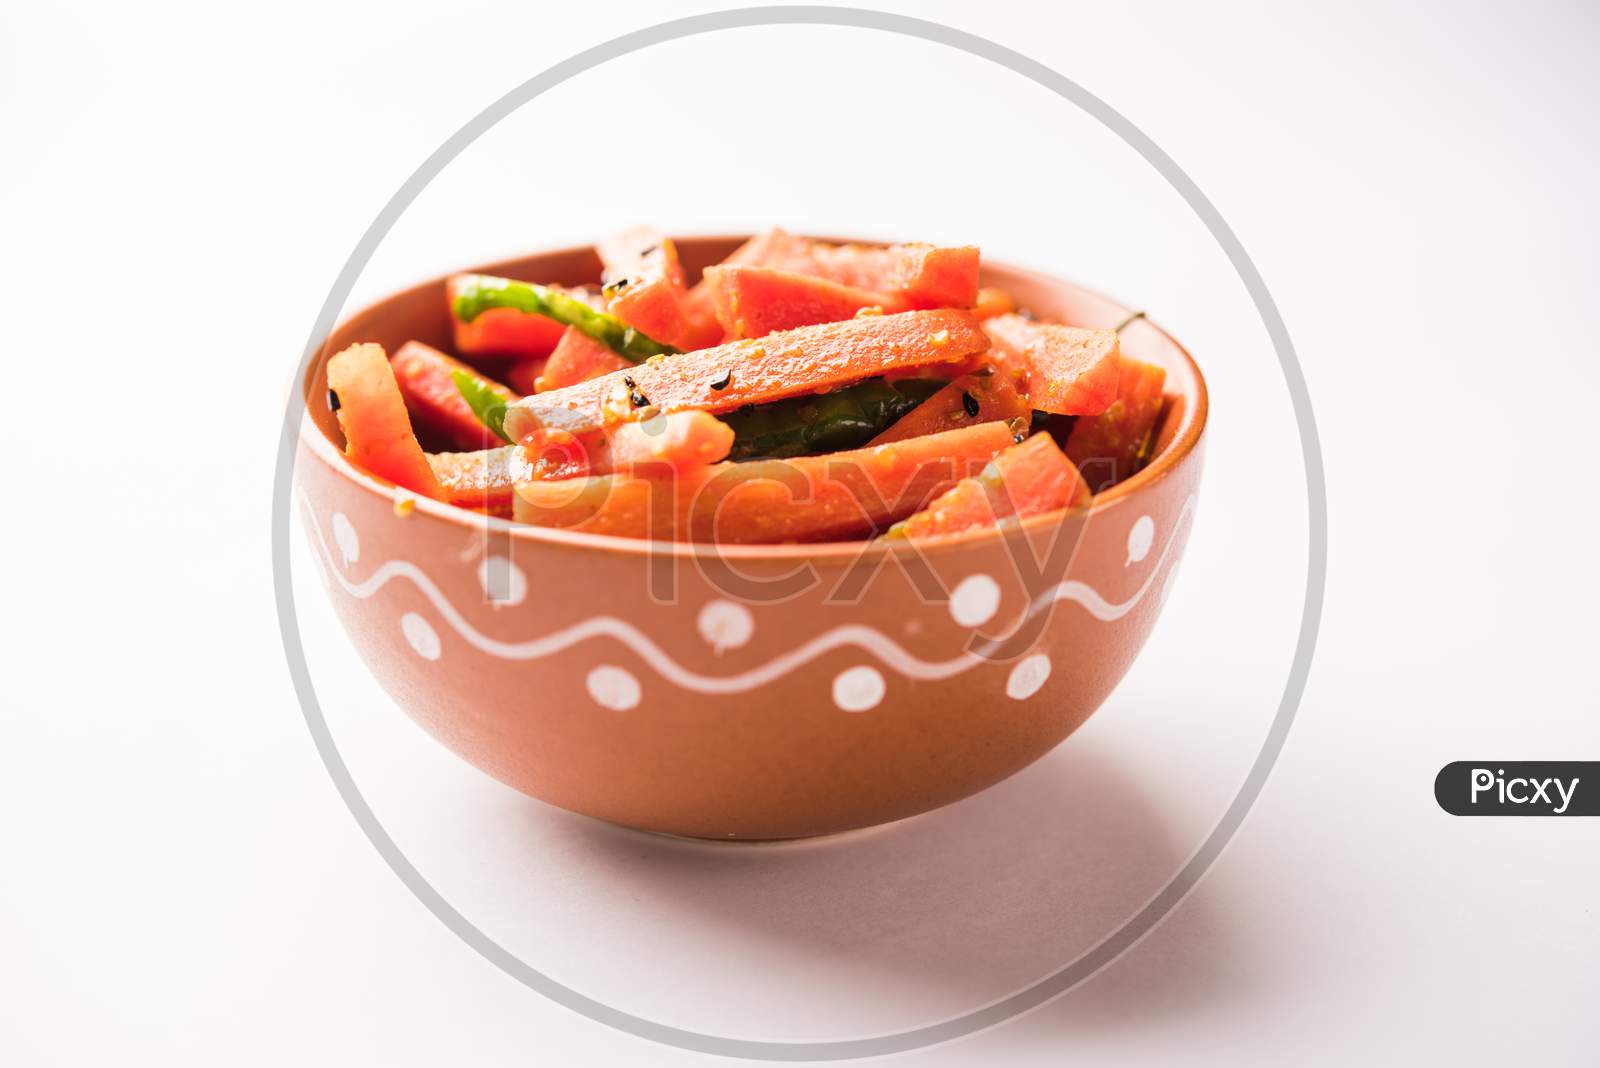 Carrot Pickle / Gajar ka Achar or loncha